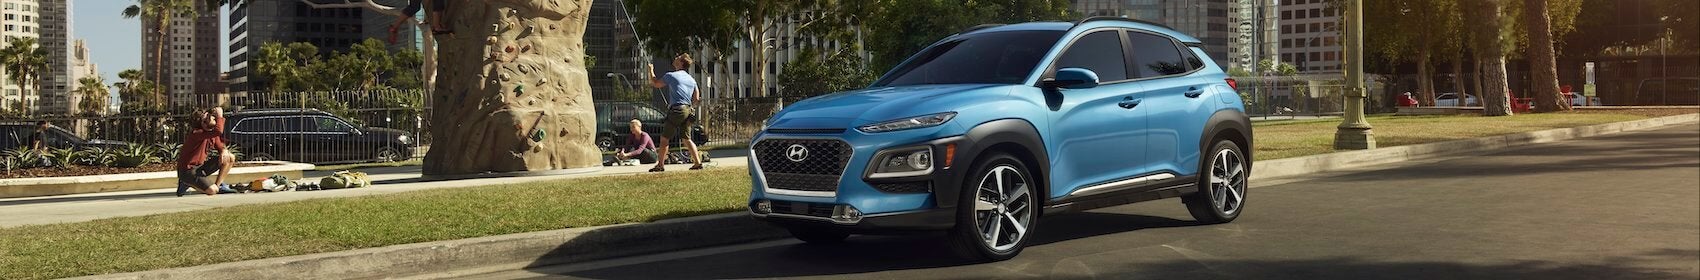 Hyundai Kona Lease Deal Farmington Hills